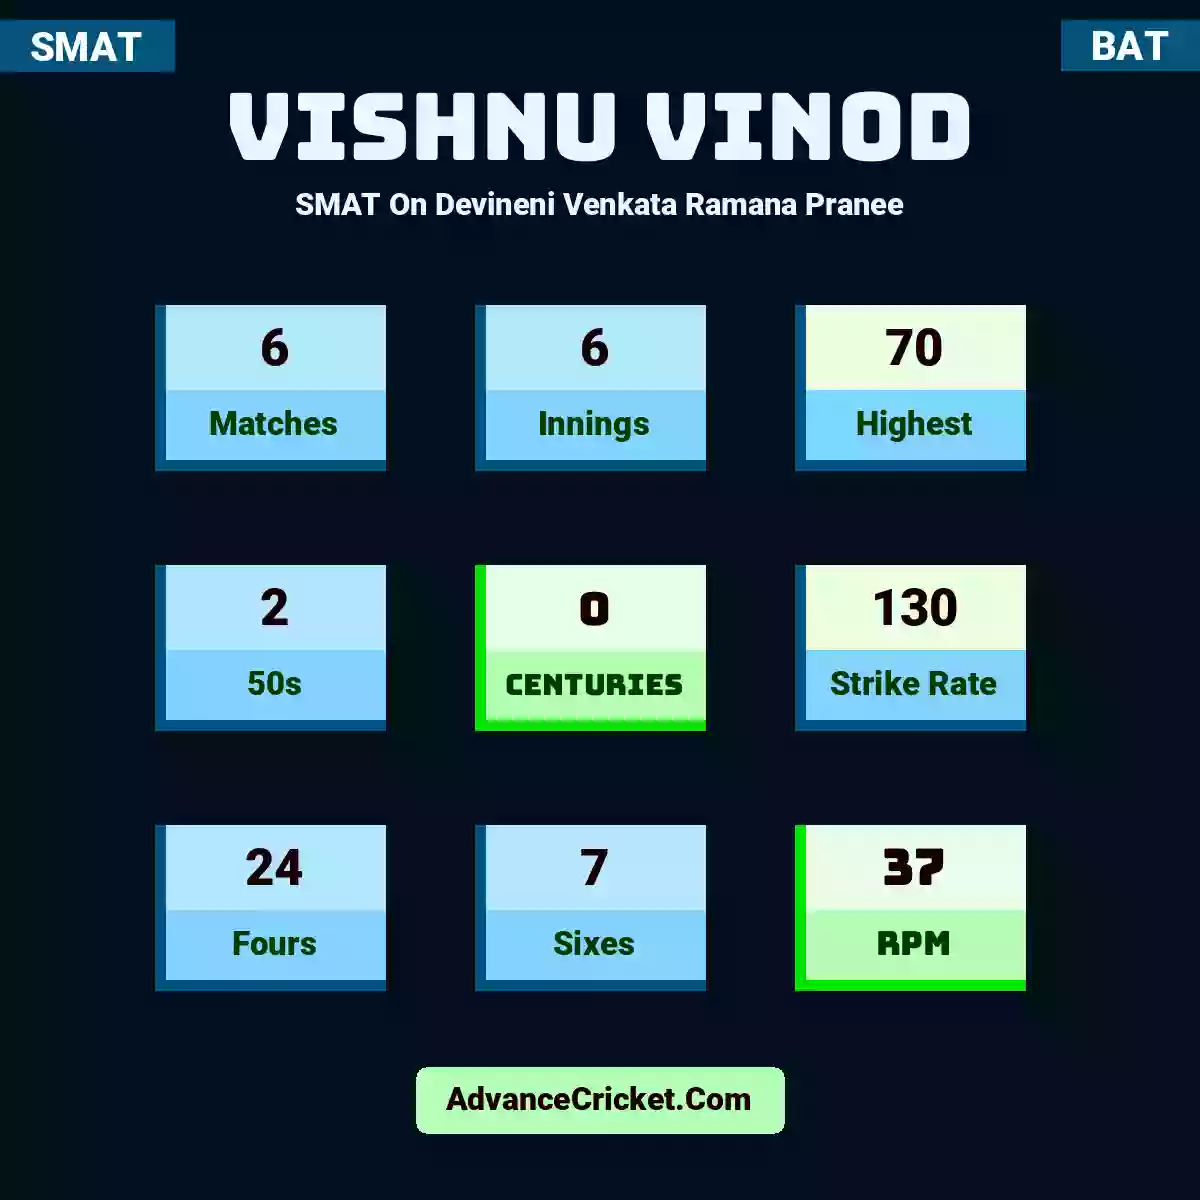 Vishnu Vinod SMAT  On Devineni Venkata Ramana Pranee, Vishnu Vinod played 6 matches, scored 70 runs as highest, 2 half-centuries, and 0 centuries, with a strike rate of 130. V.Vinod hit 24 fours and 7 sixes, with an RPM of 37.